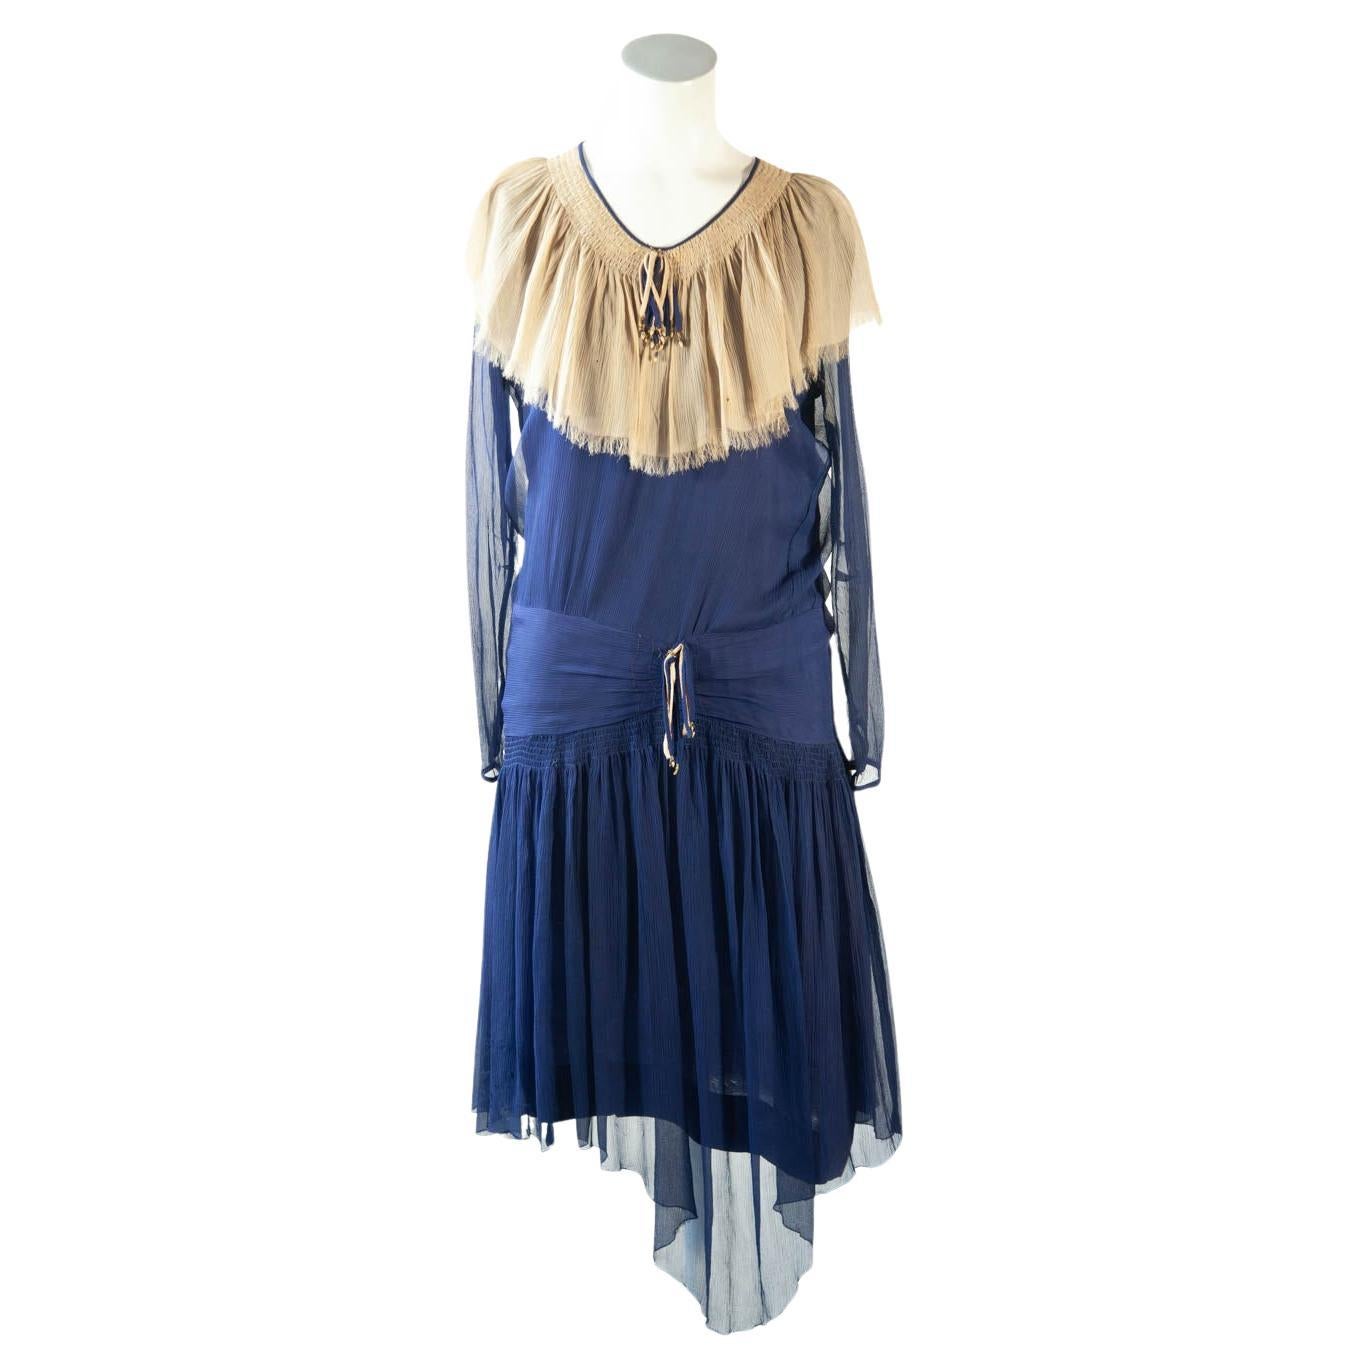 Very Vintage Original 1920s Silk Chiffon Blue Dress